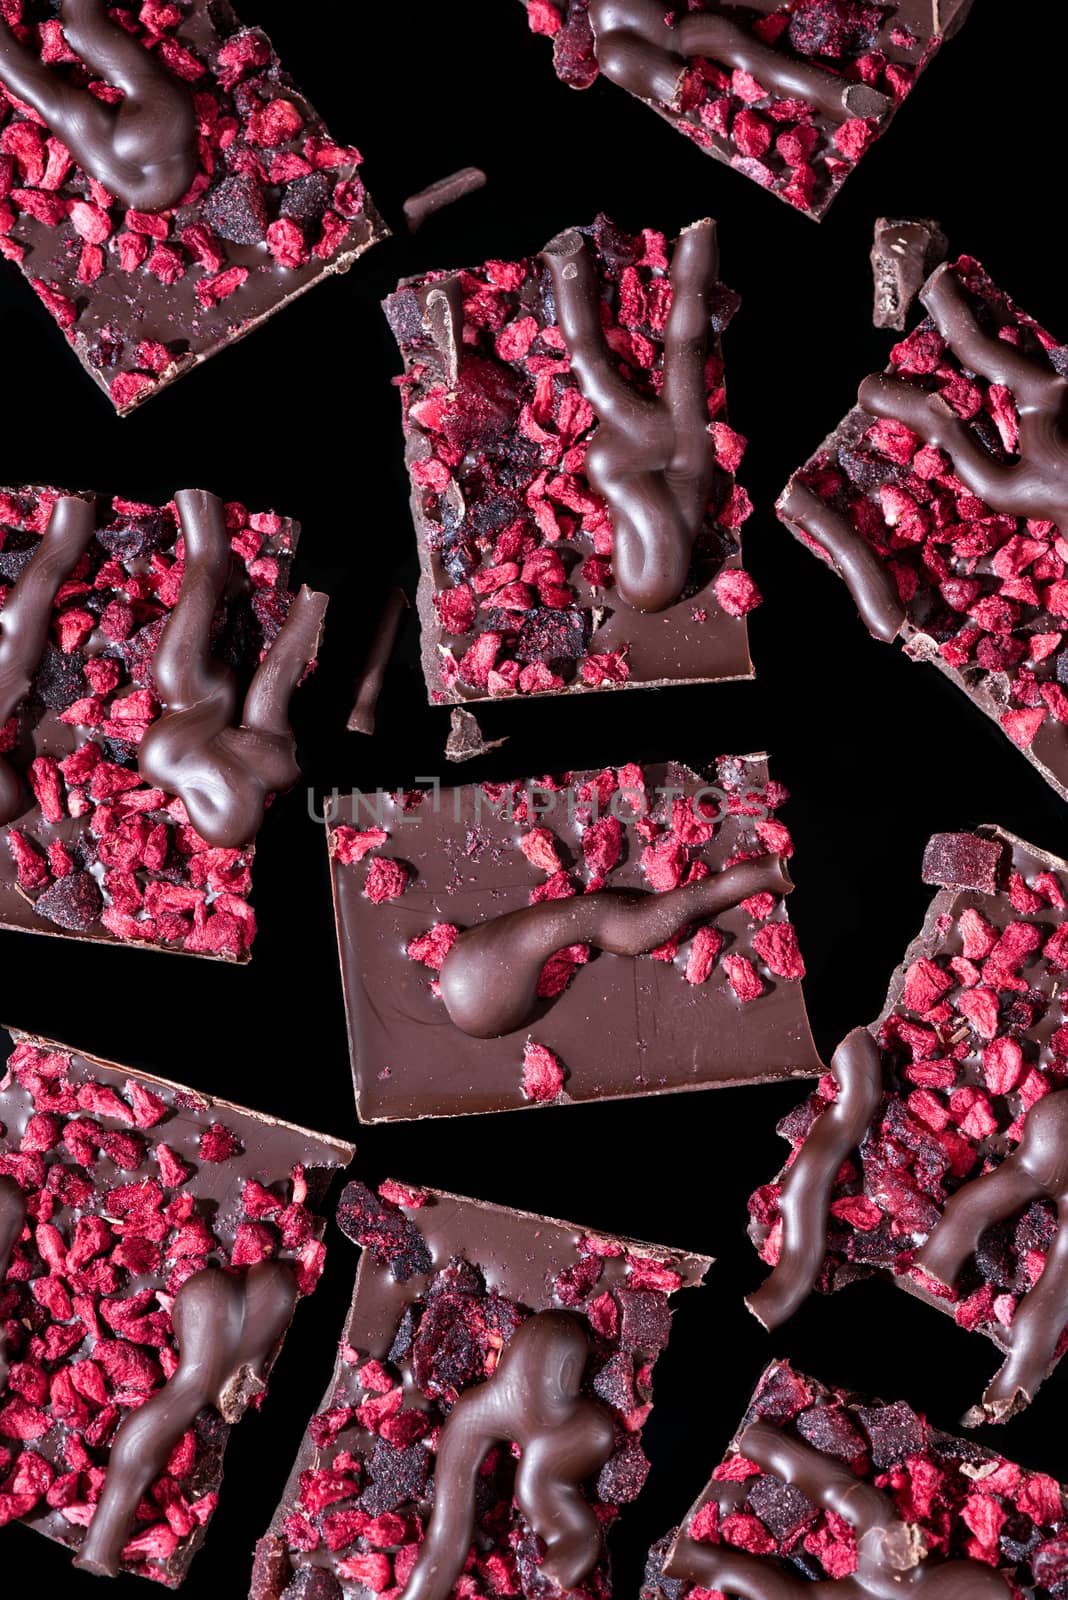 Broken Pieces of Chocolate Bar on Dark Background. Close Up View.